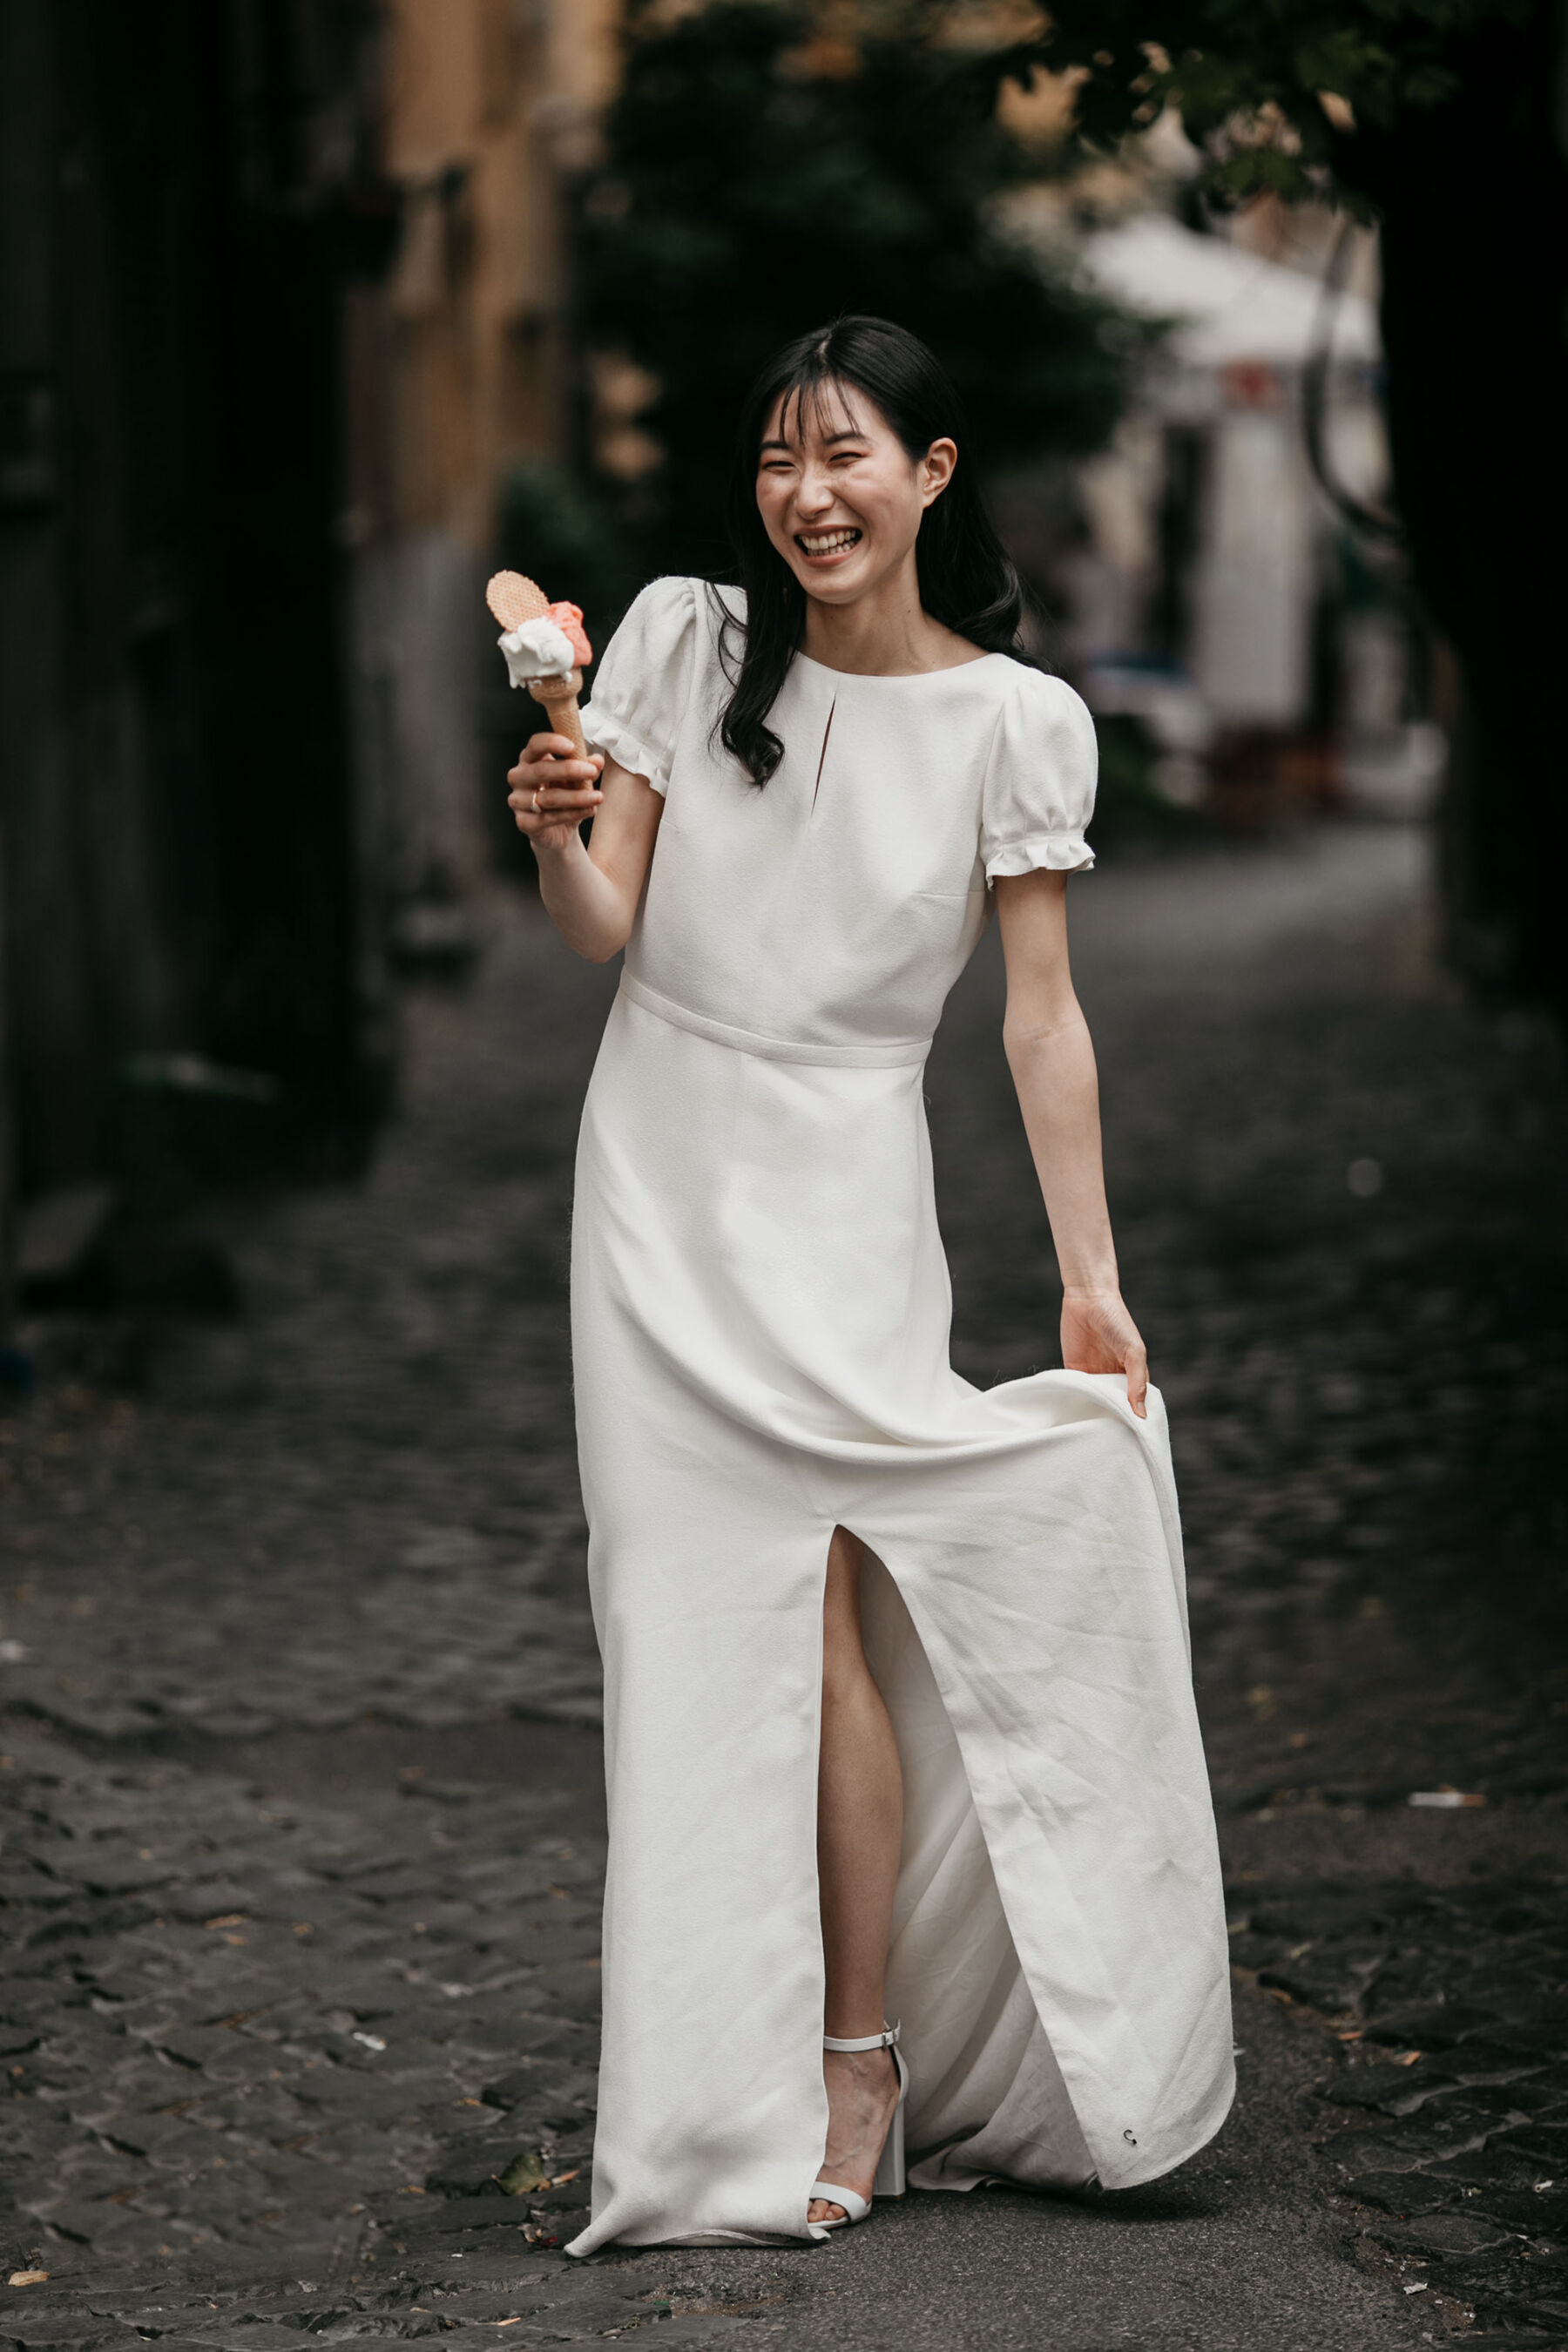 Bride eating icecream in Laure de Sagazan dress in Rome